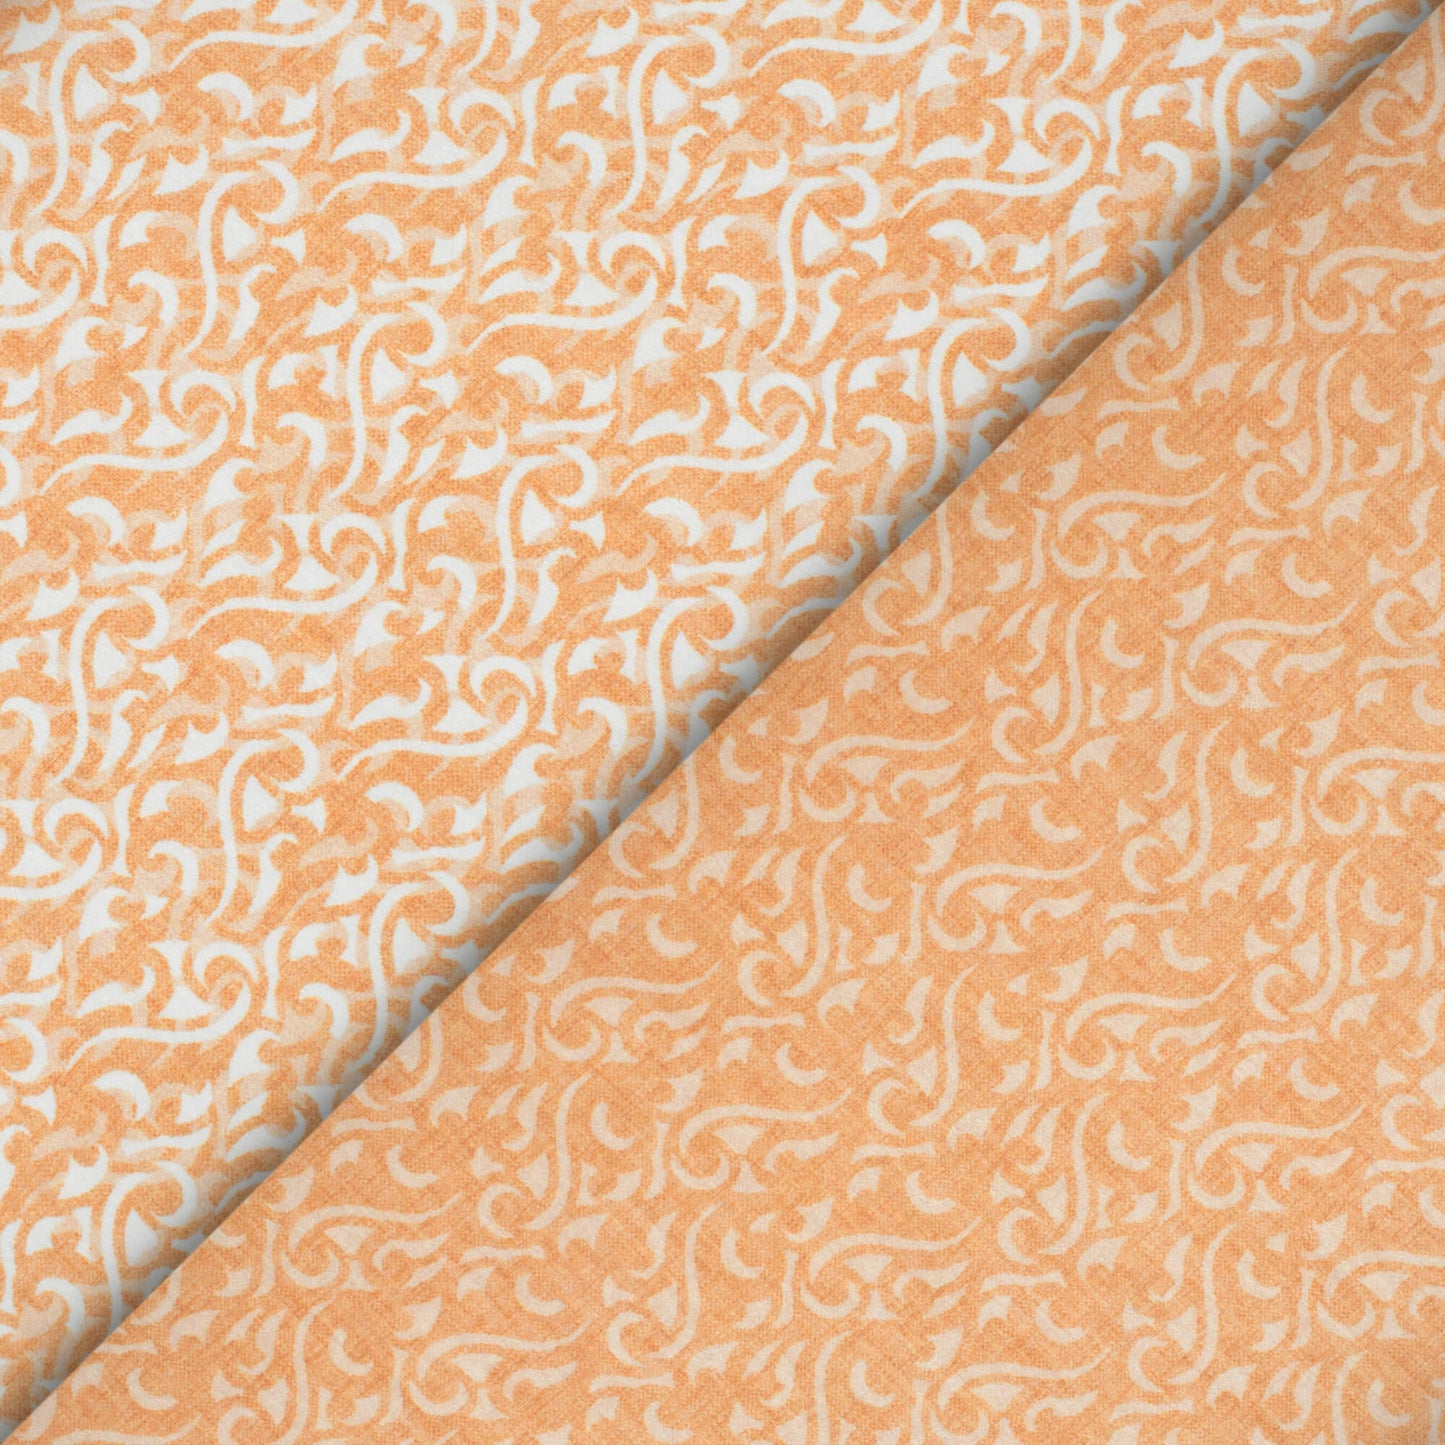 Melon Orange Abstract Pattern Digital Print Lush Satin Fabric